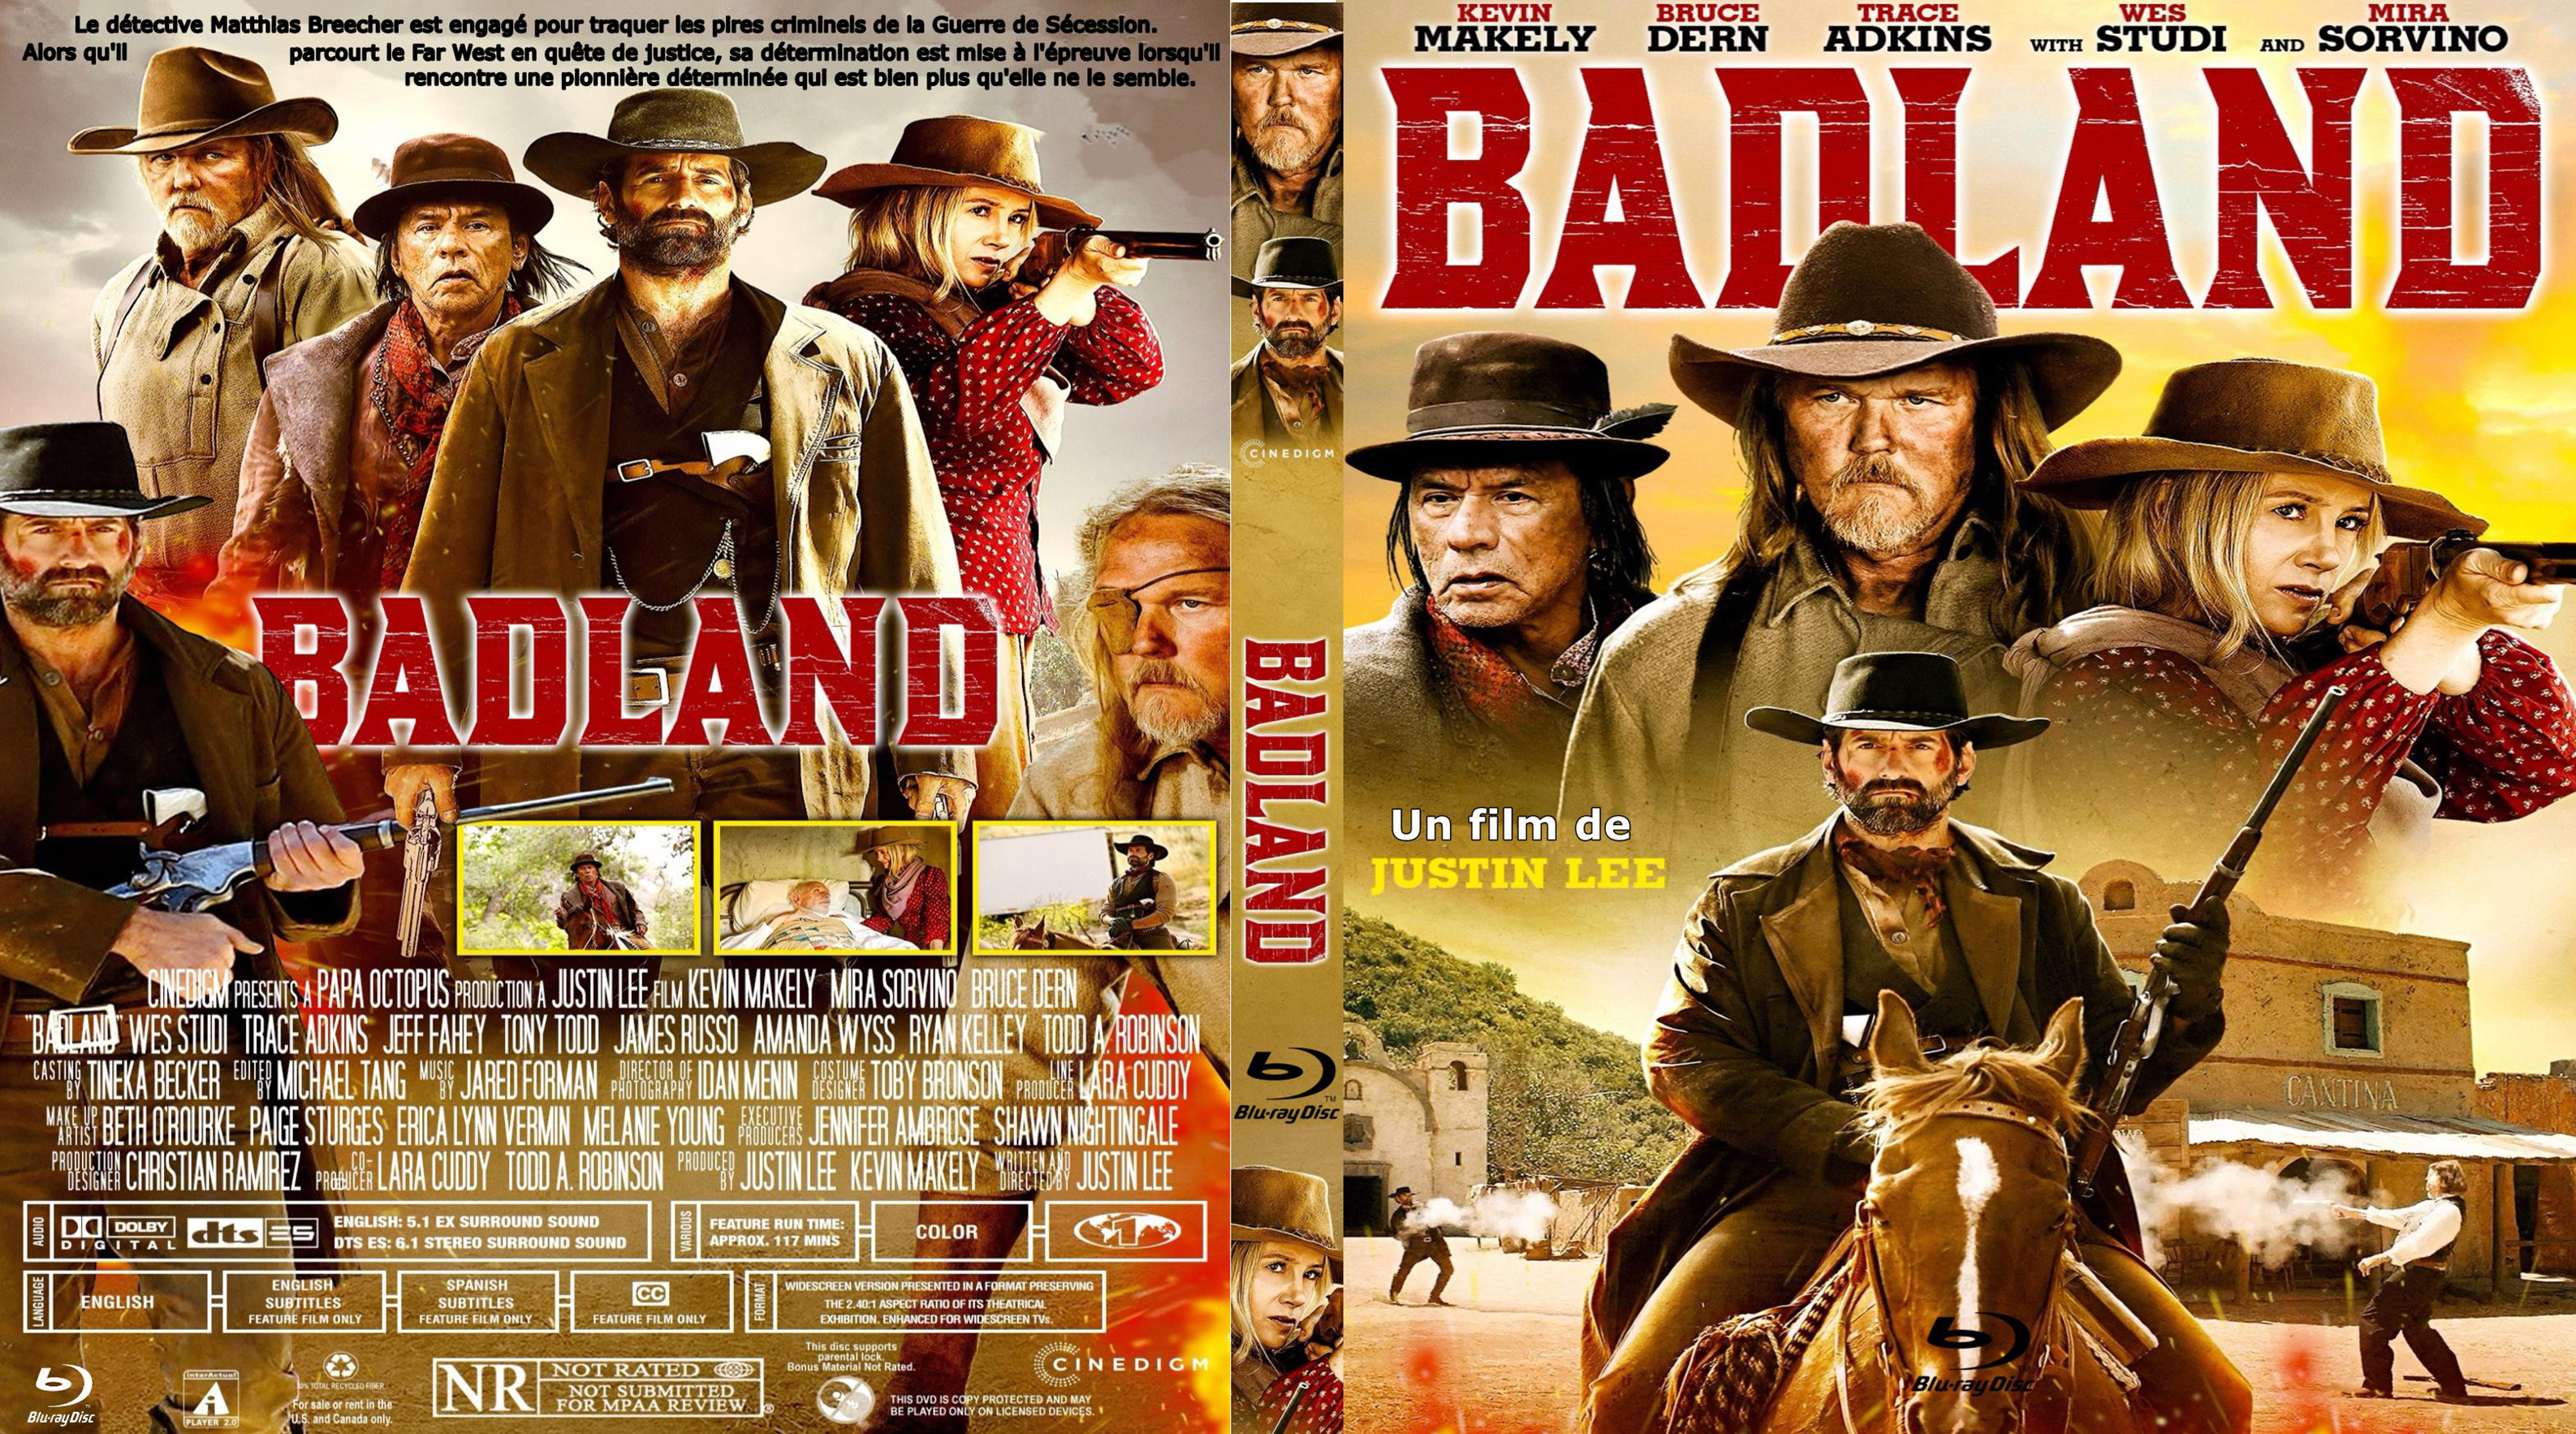 Jaquette DVD Badland custom (BLU-RAY)